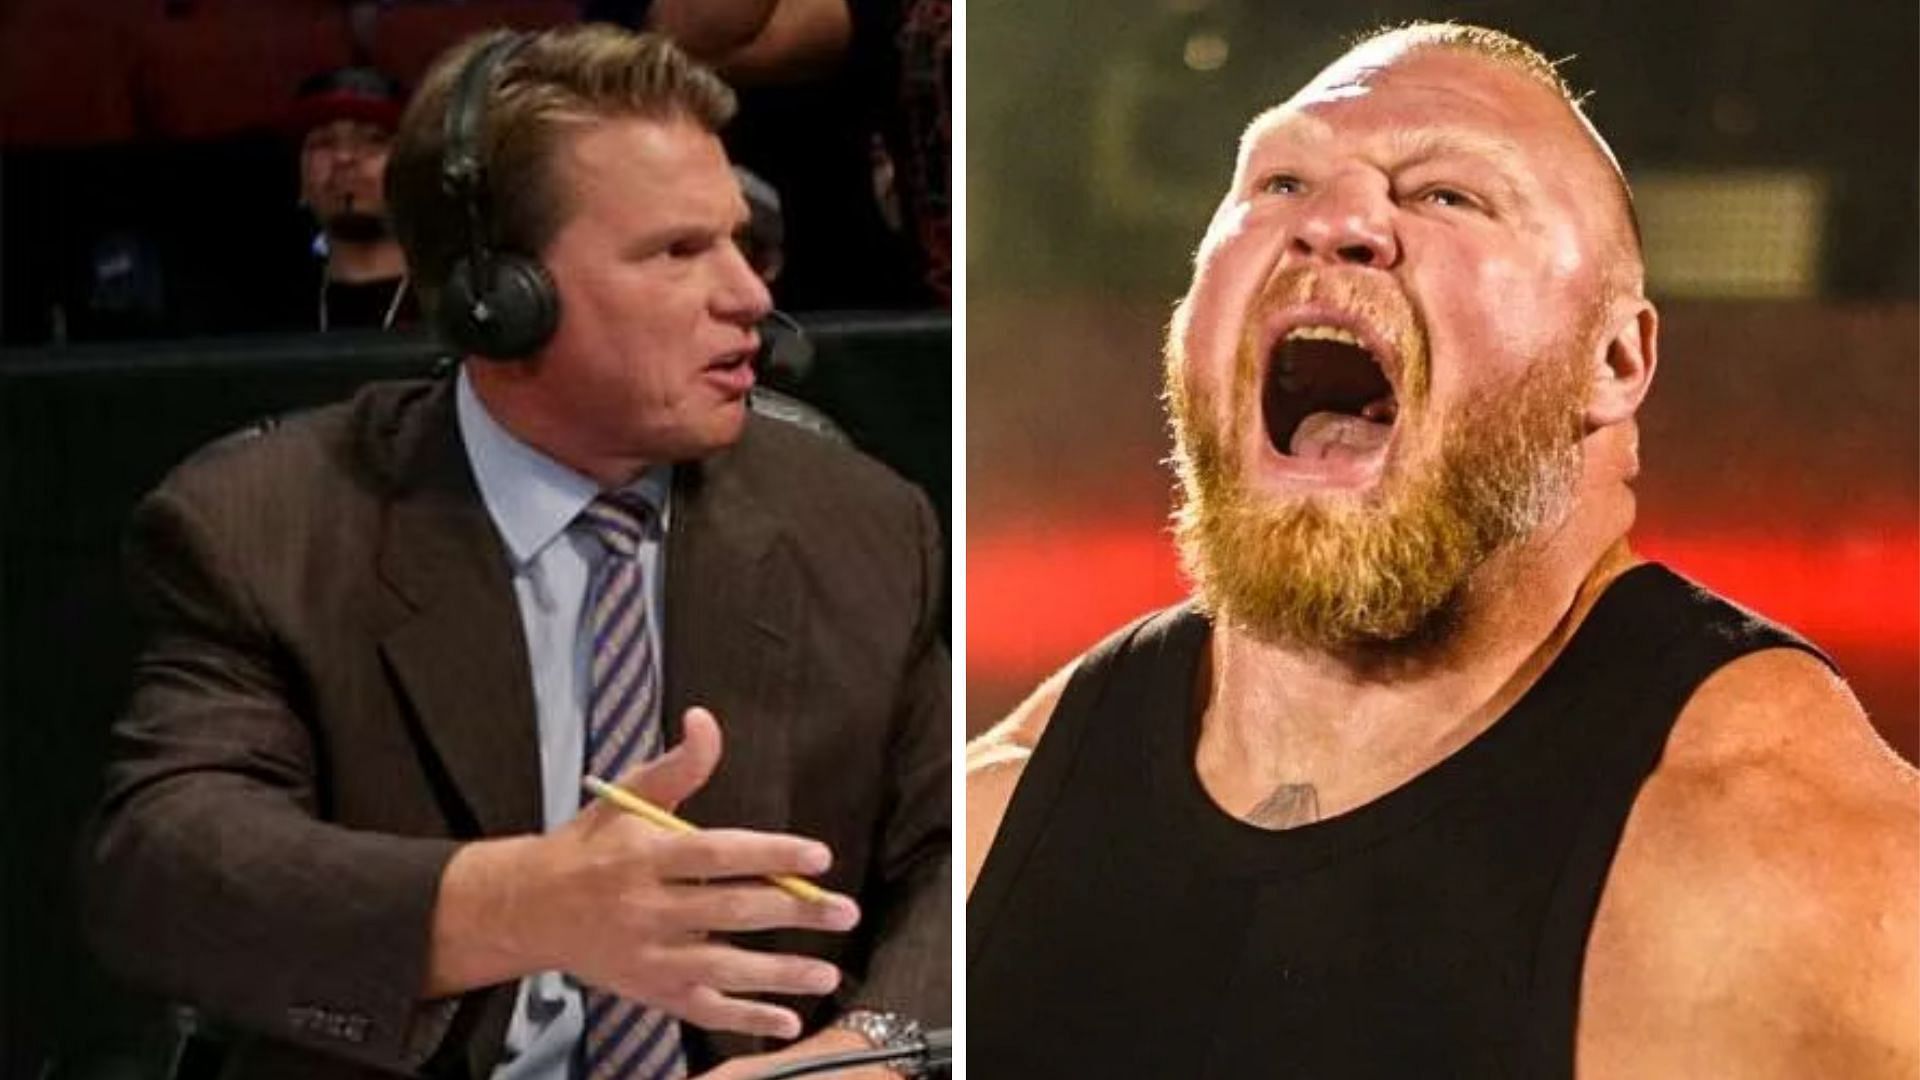 Brutal backstage brawl sets up massive WWE match involving 7 stars!